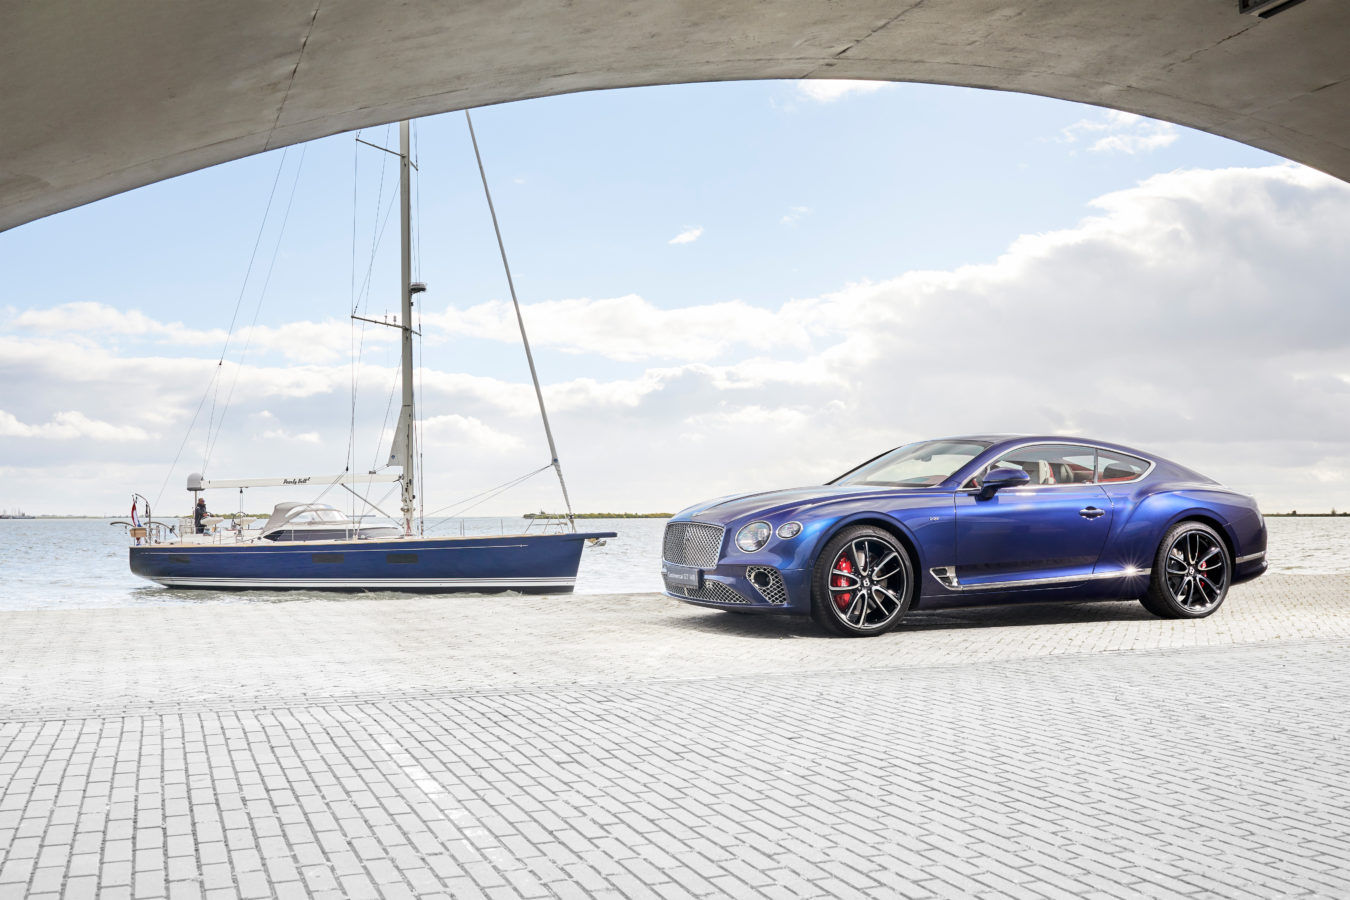 Bentley Motors Brings its Unique Design to the Contest 59 CS Luxury Yacht Interior